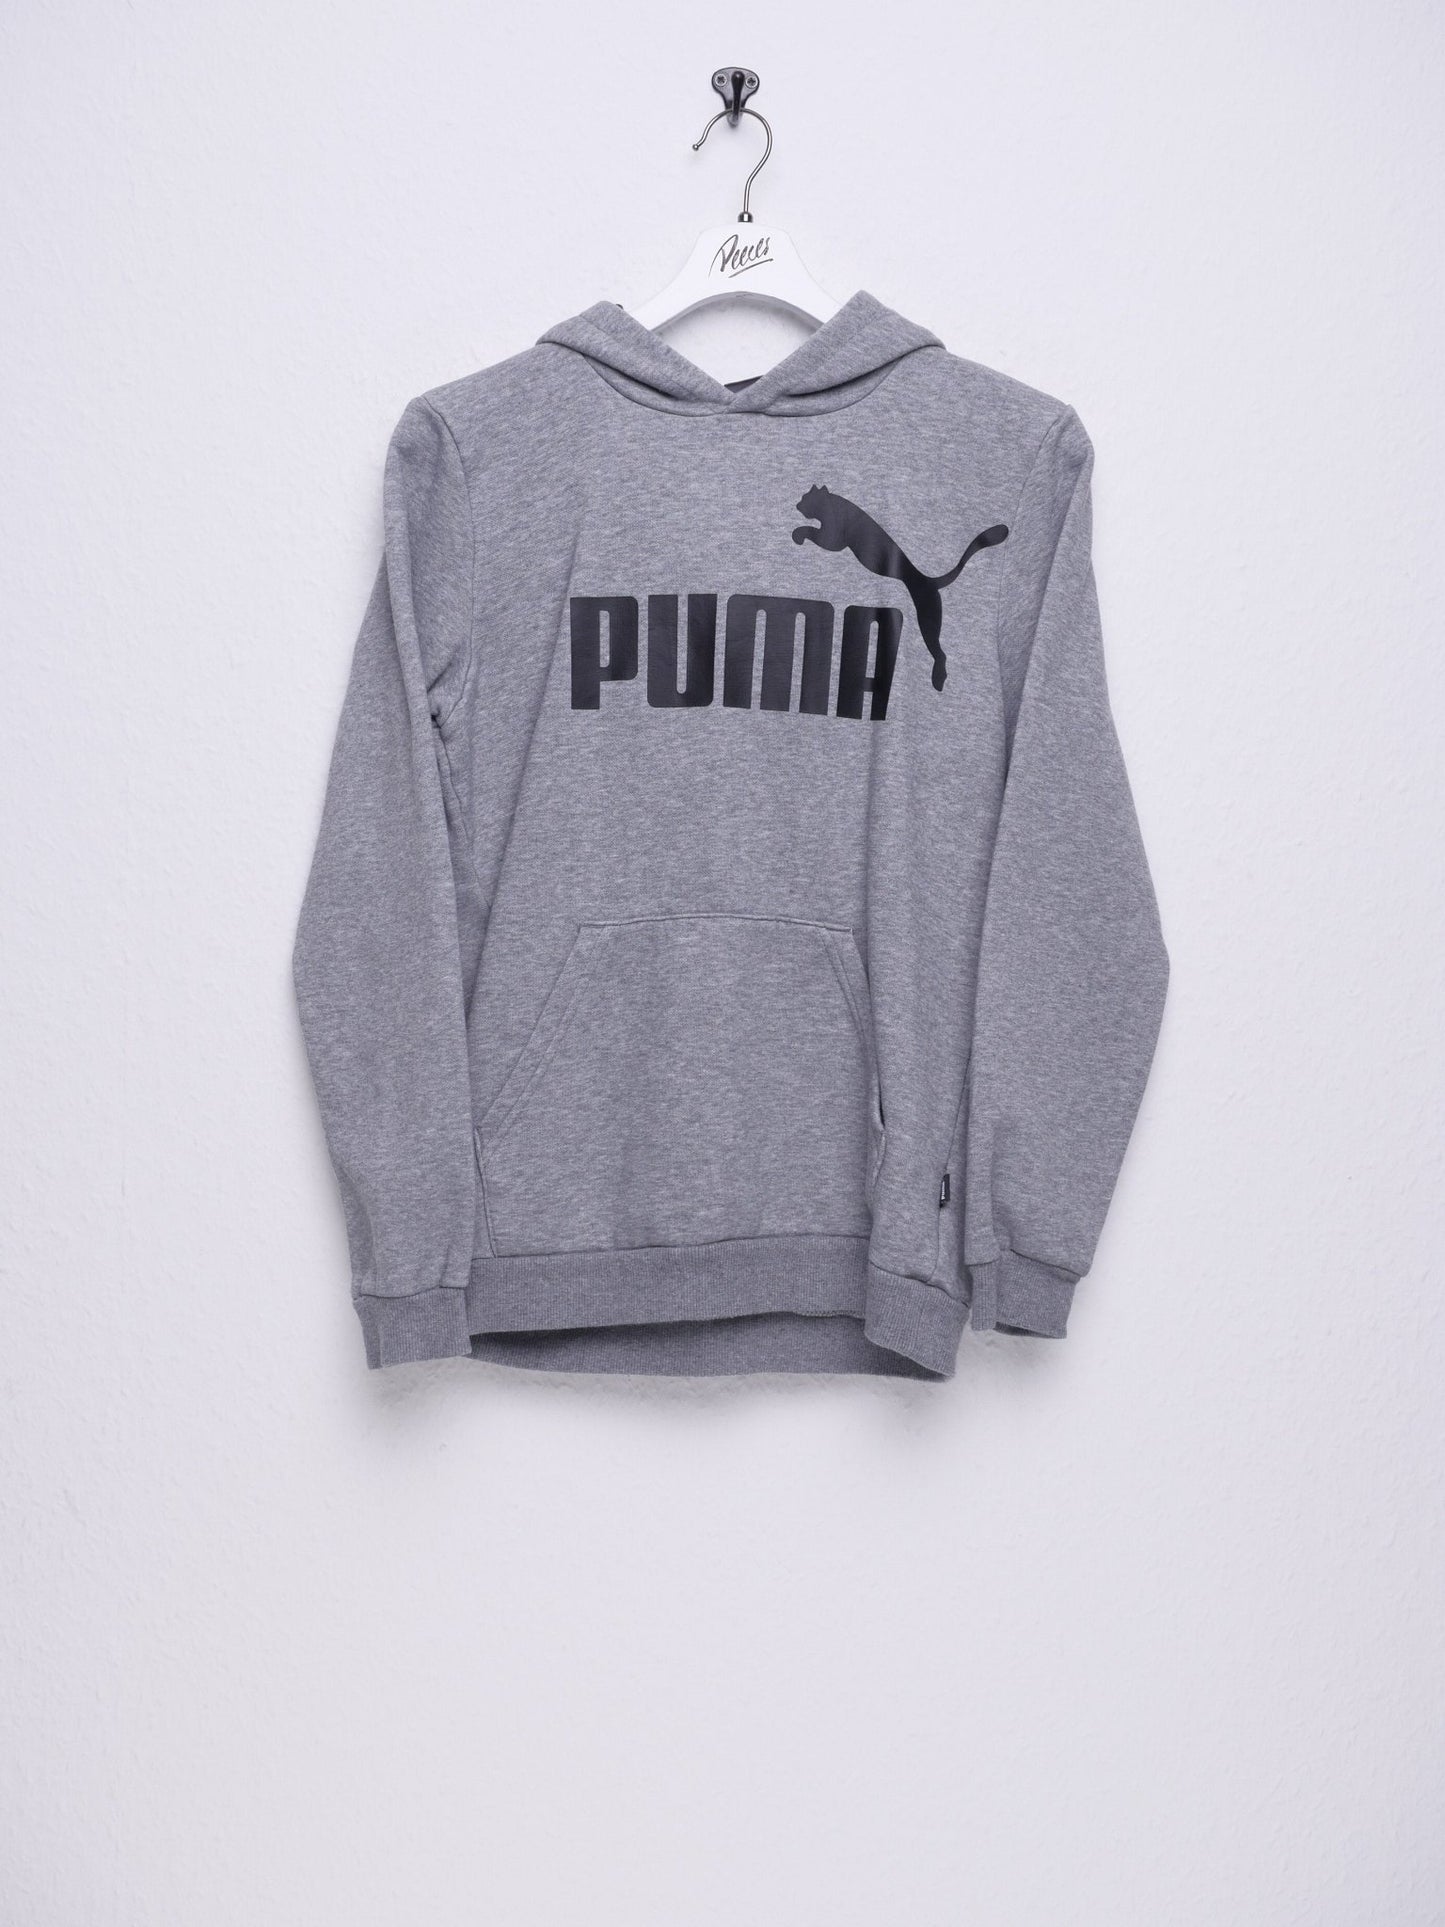 puma printed Spellout grey basic Hoodie - Peeces